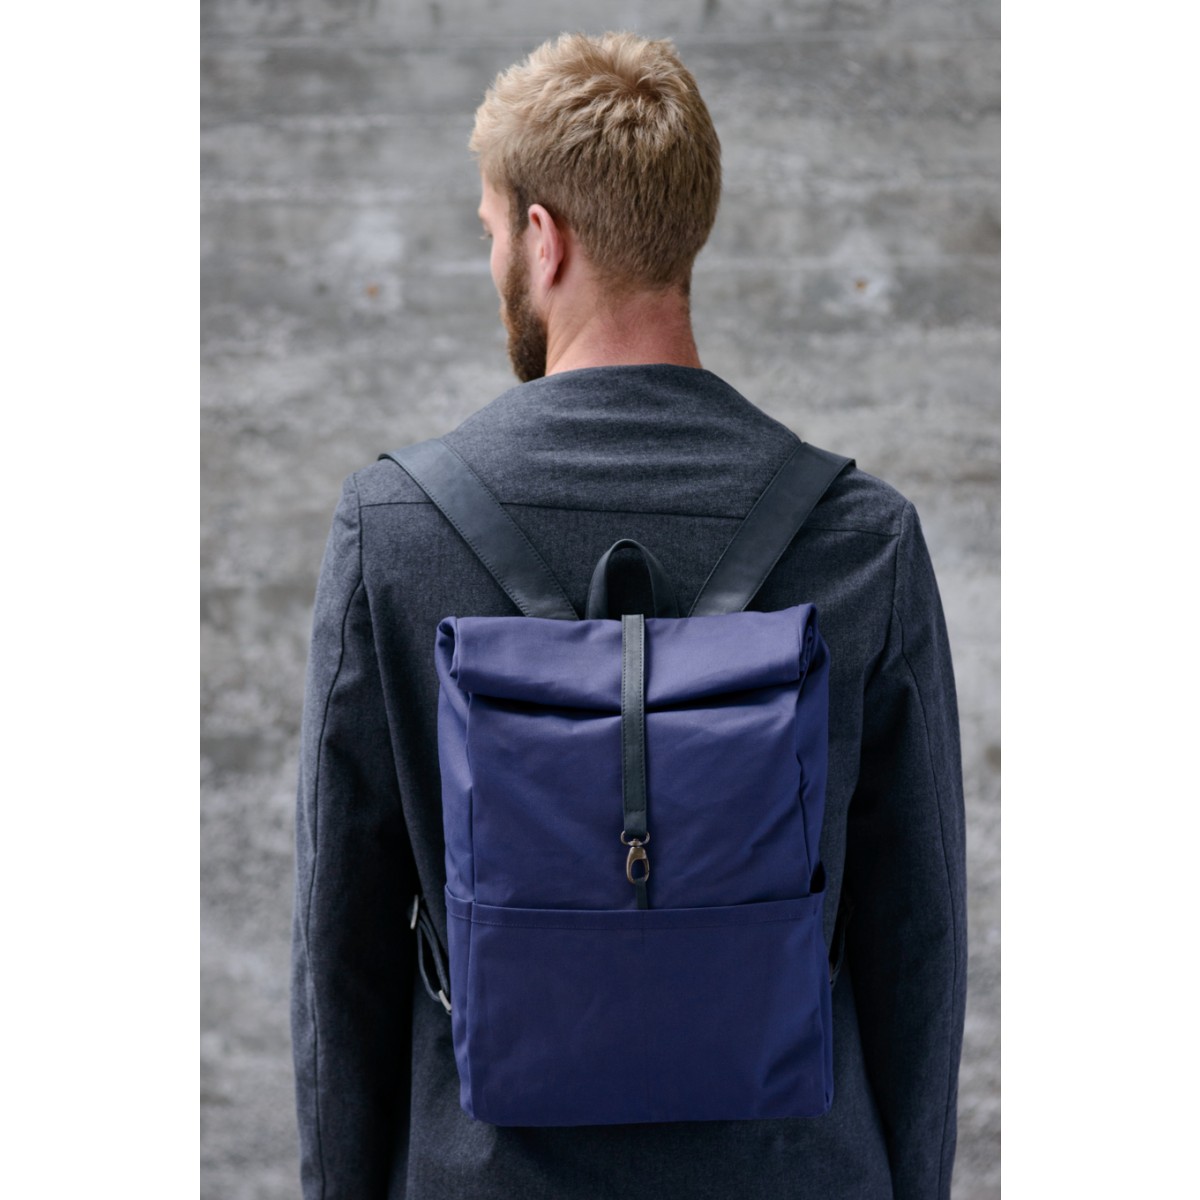 VANOOK Backpack Navy / Charcoal